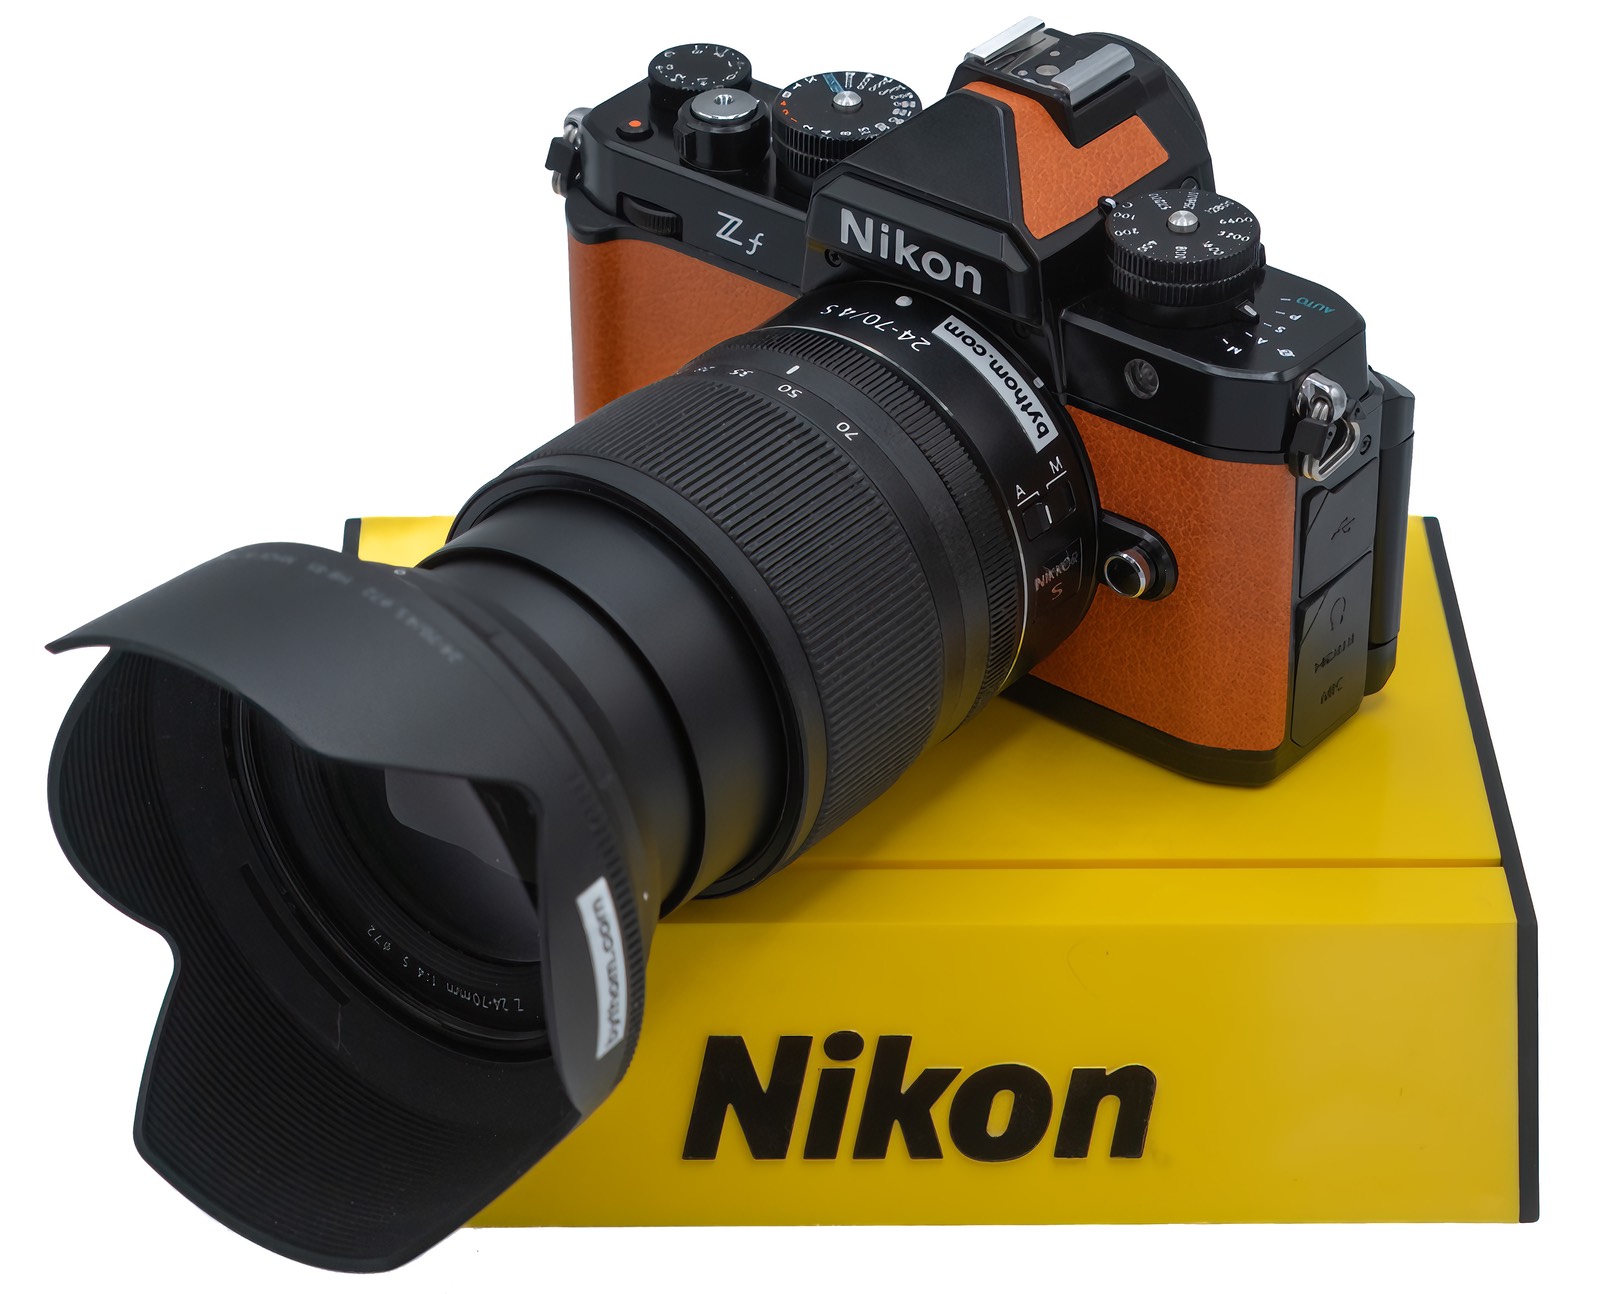 Nikon Zf Review  Photography Blog